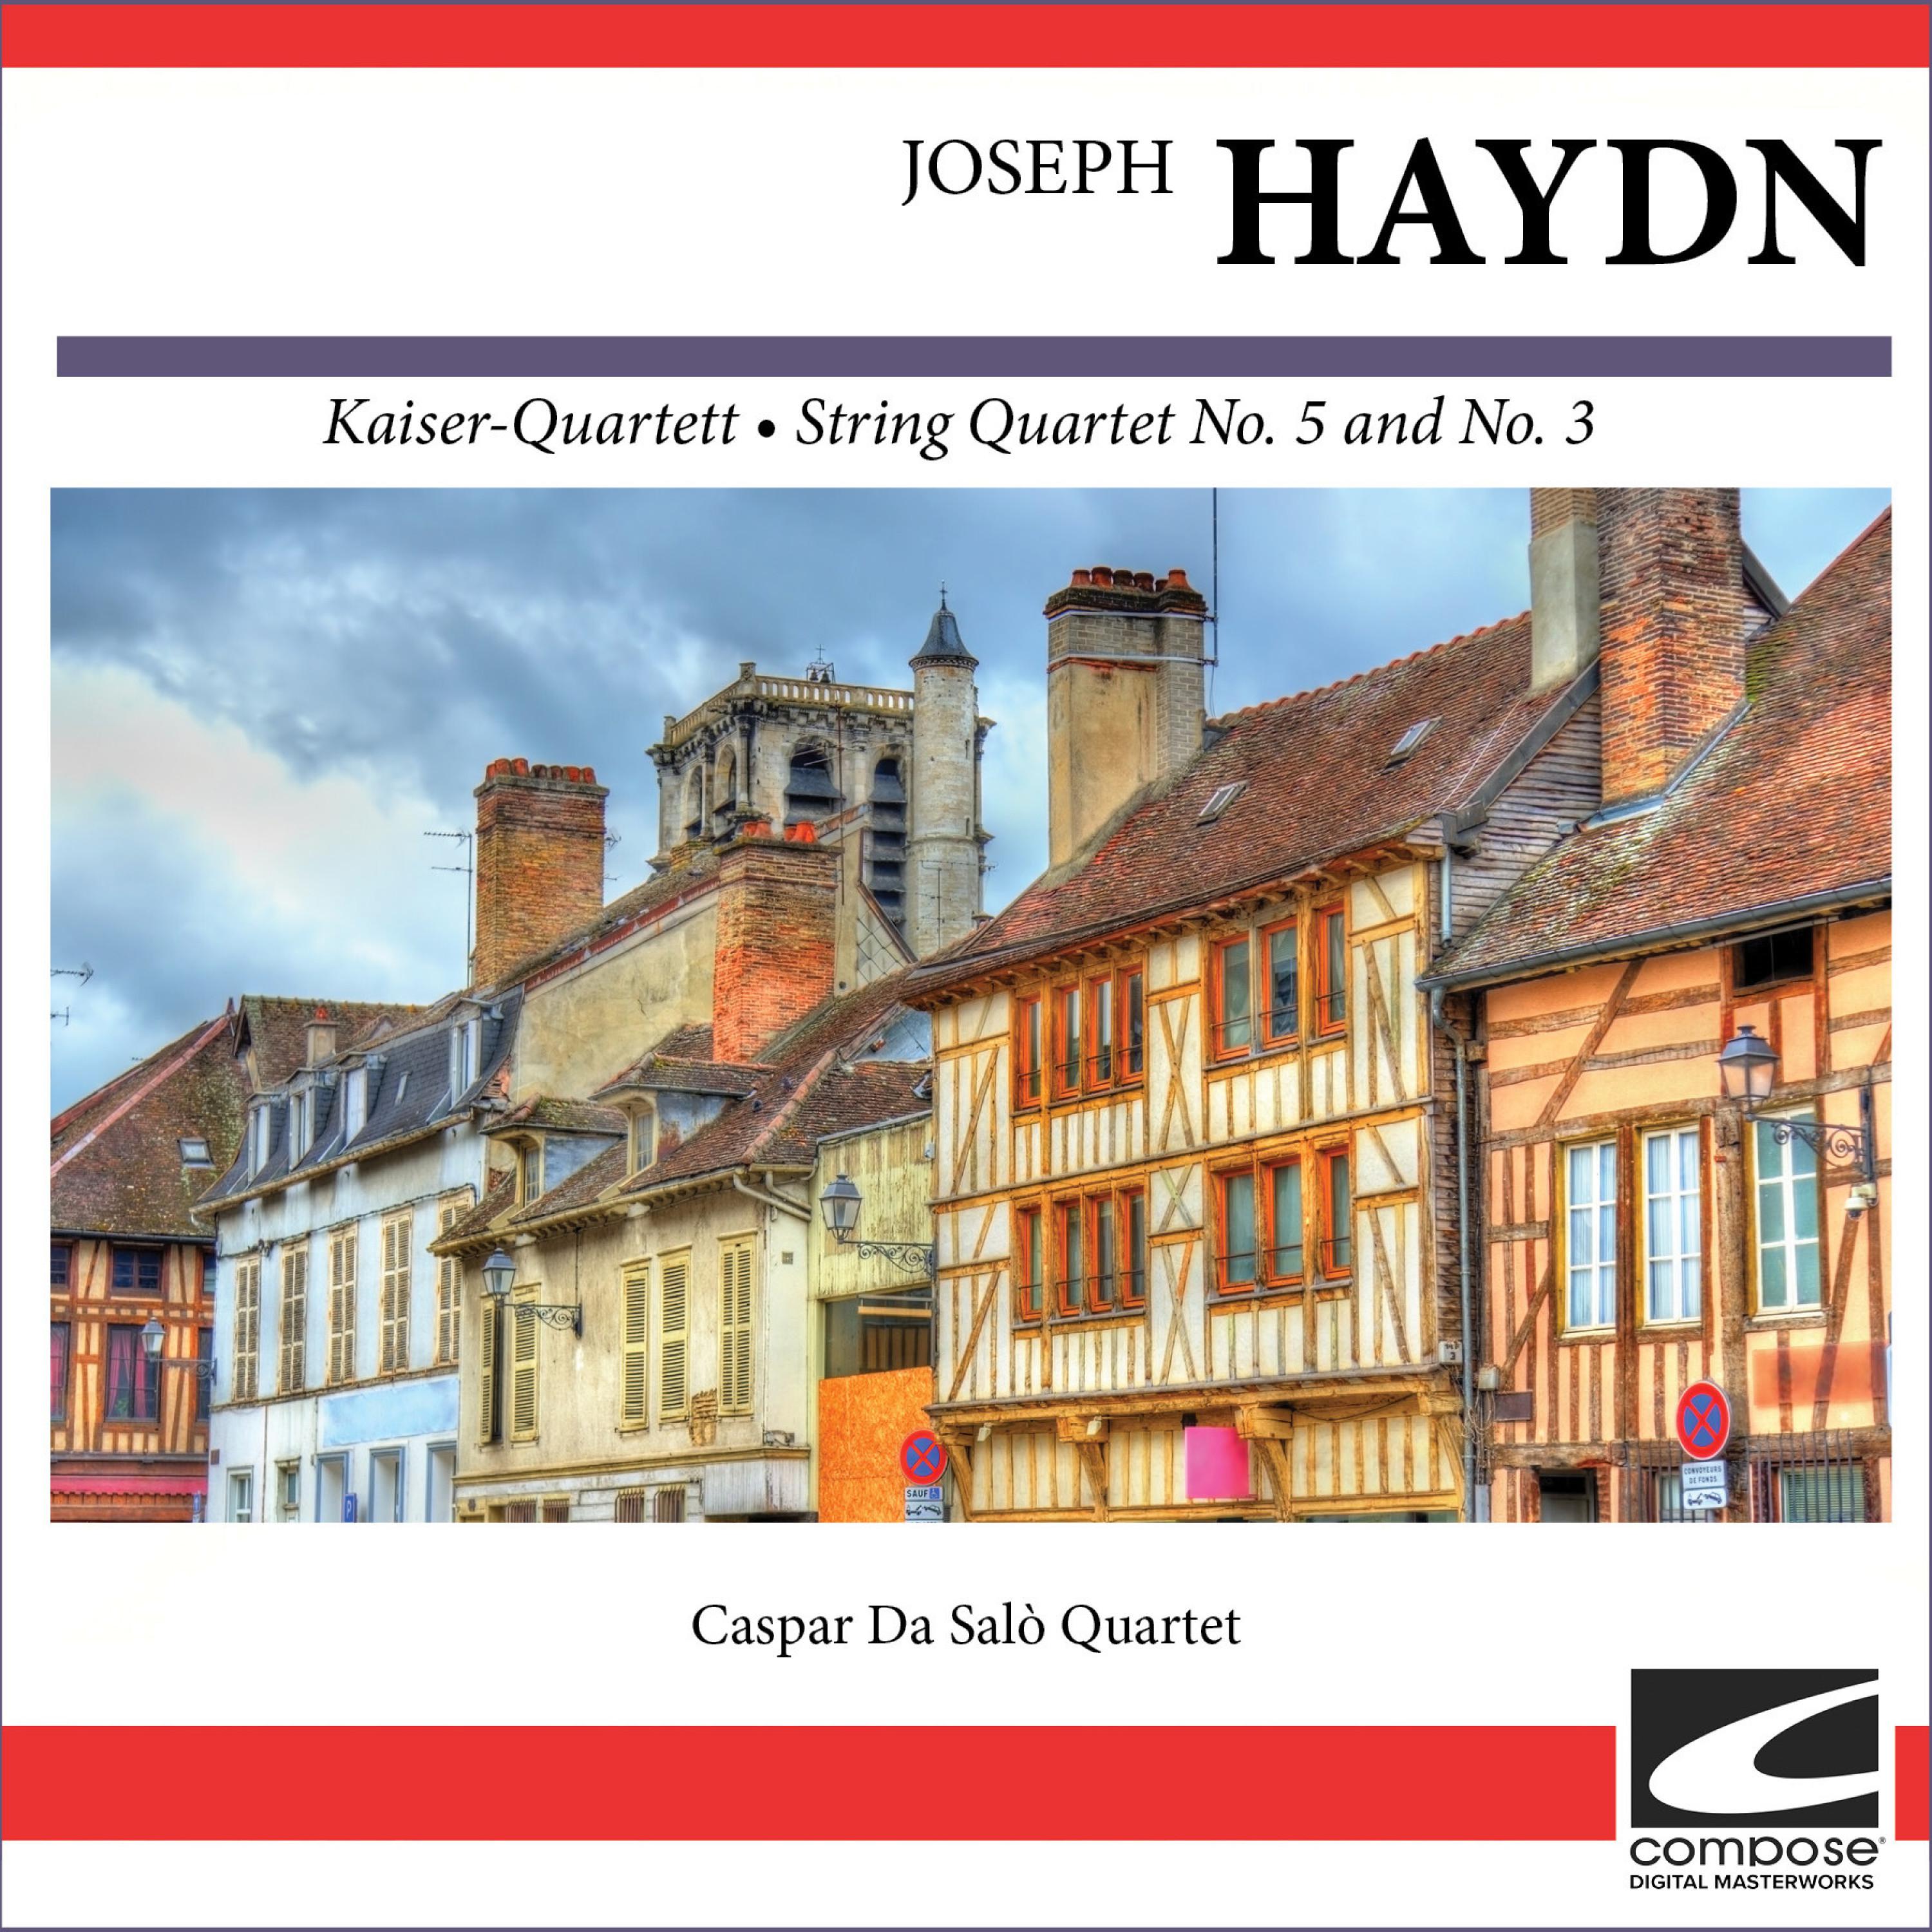 Caspar da Salo Quartet - Haydn String Quartet Op. 1 No. 1 in B flat major 'Hunting Quartet' - Minuet - Minuet secondo